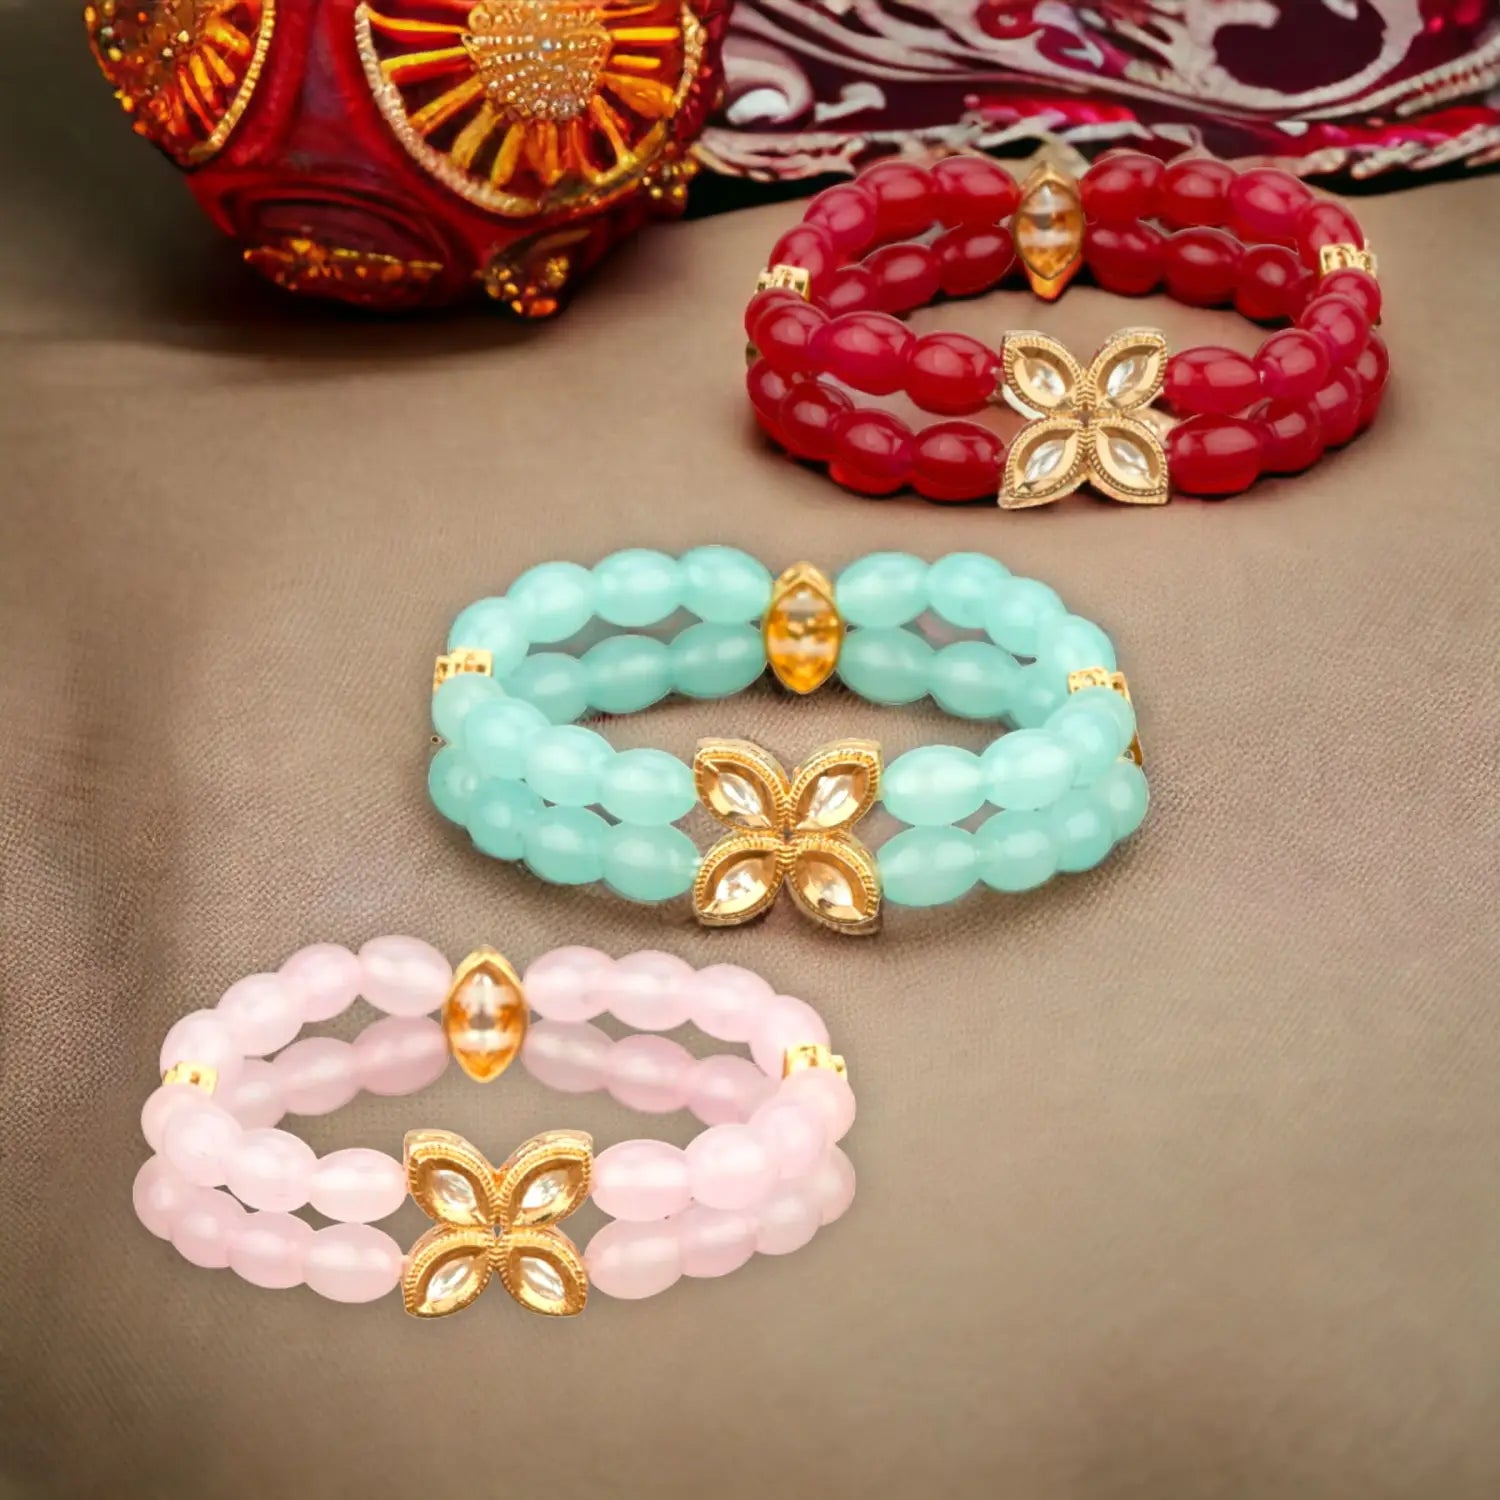 Ethnic Bracelet Collection Lovenspire